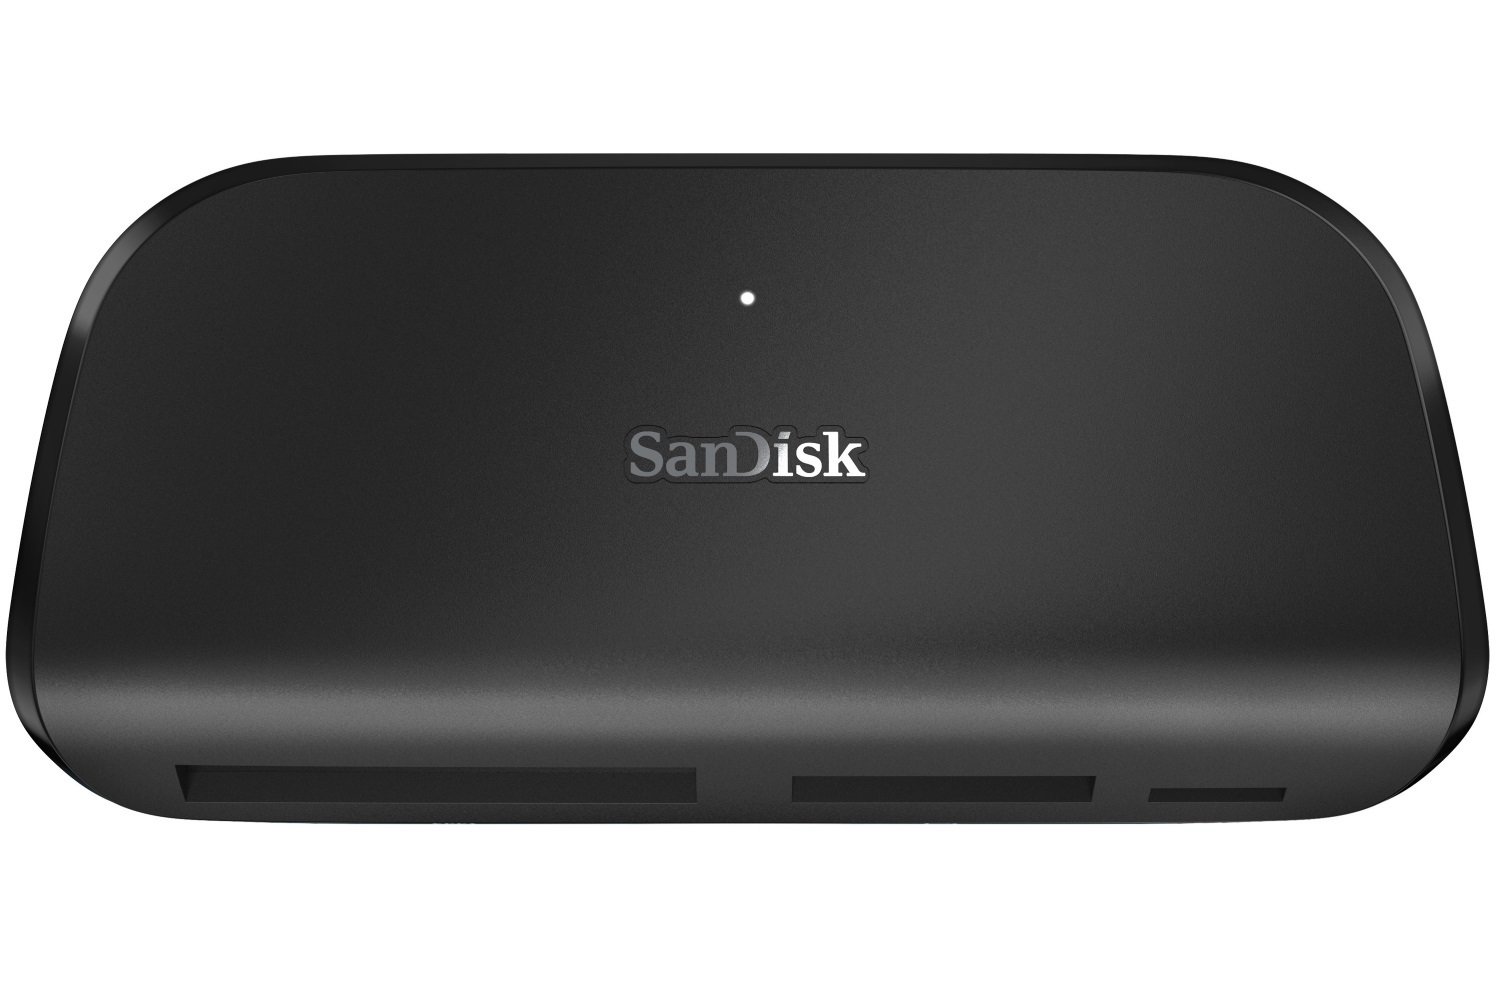 SanDisk ImageMate PRO Multi-Card Reader / Writer Review